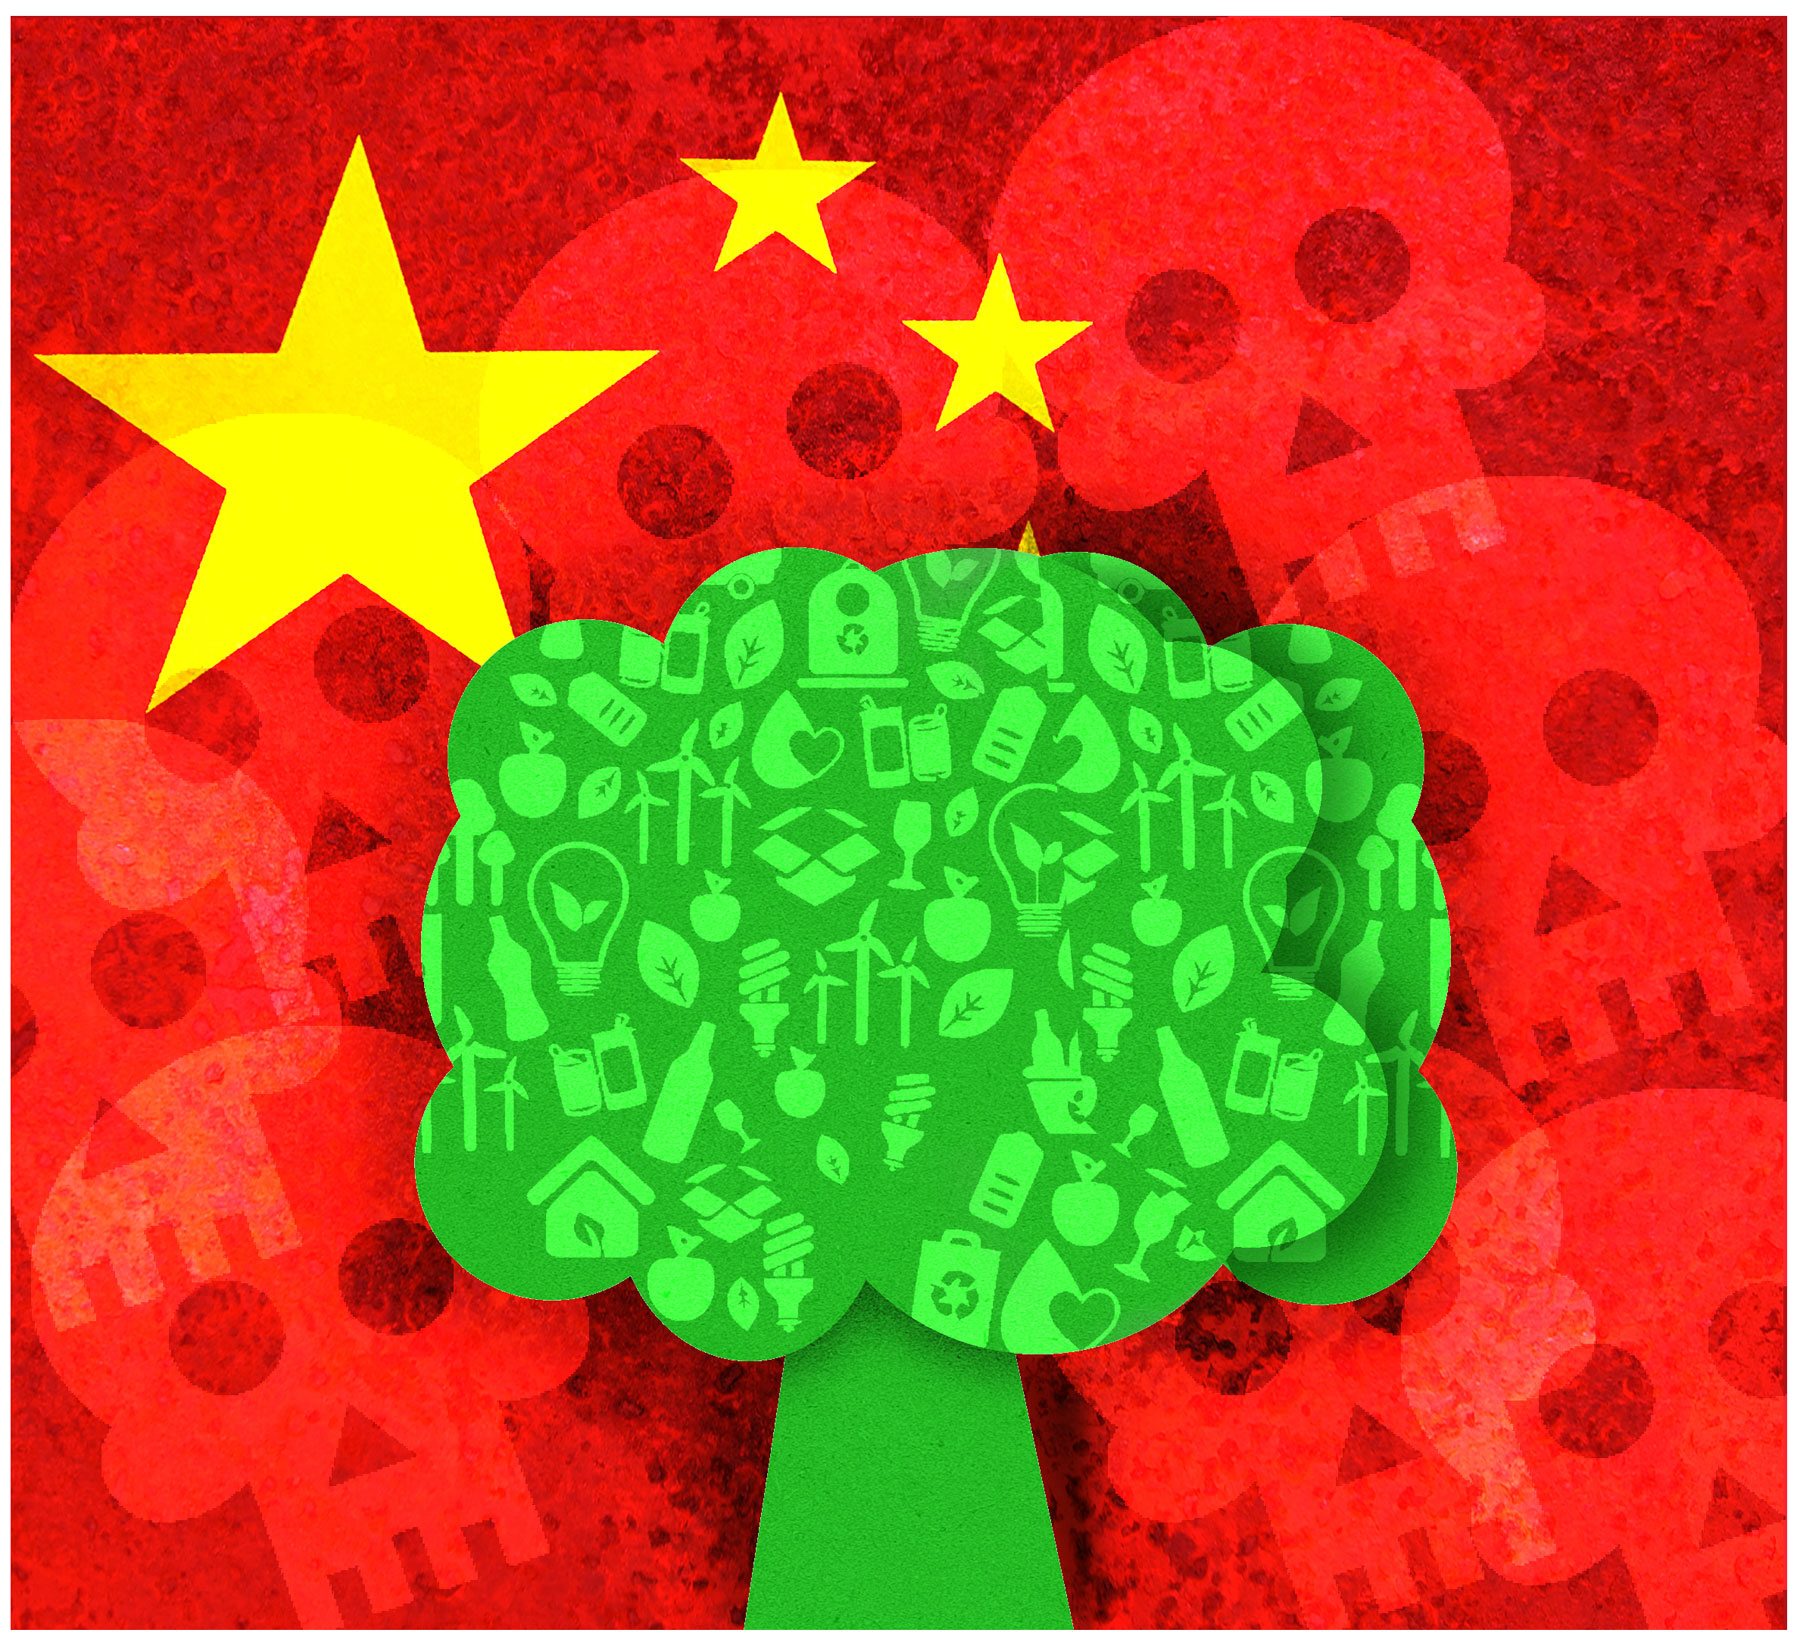 China is trying to greenwash its environmental crimes - Washington Times